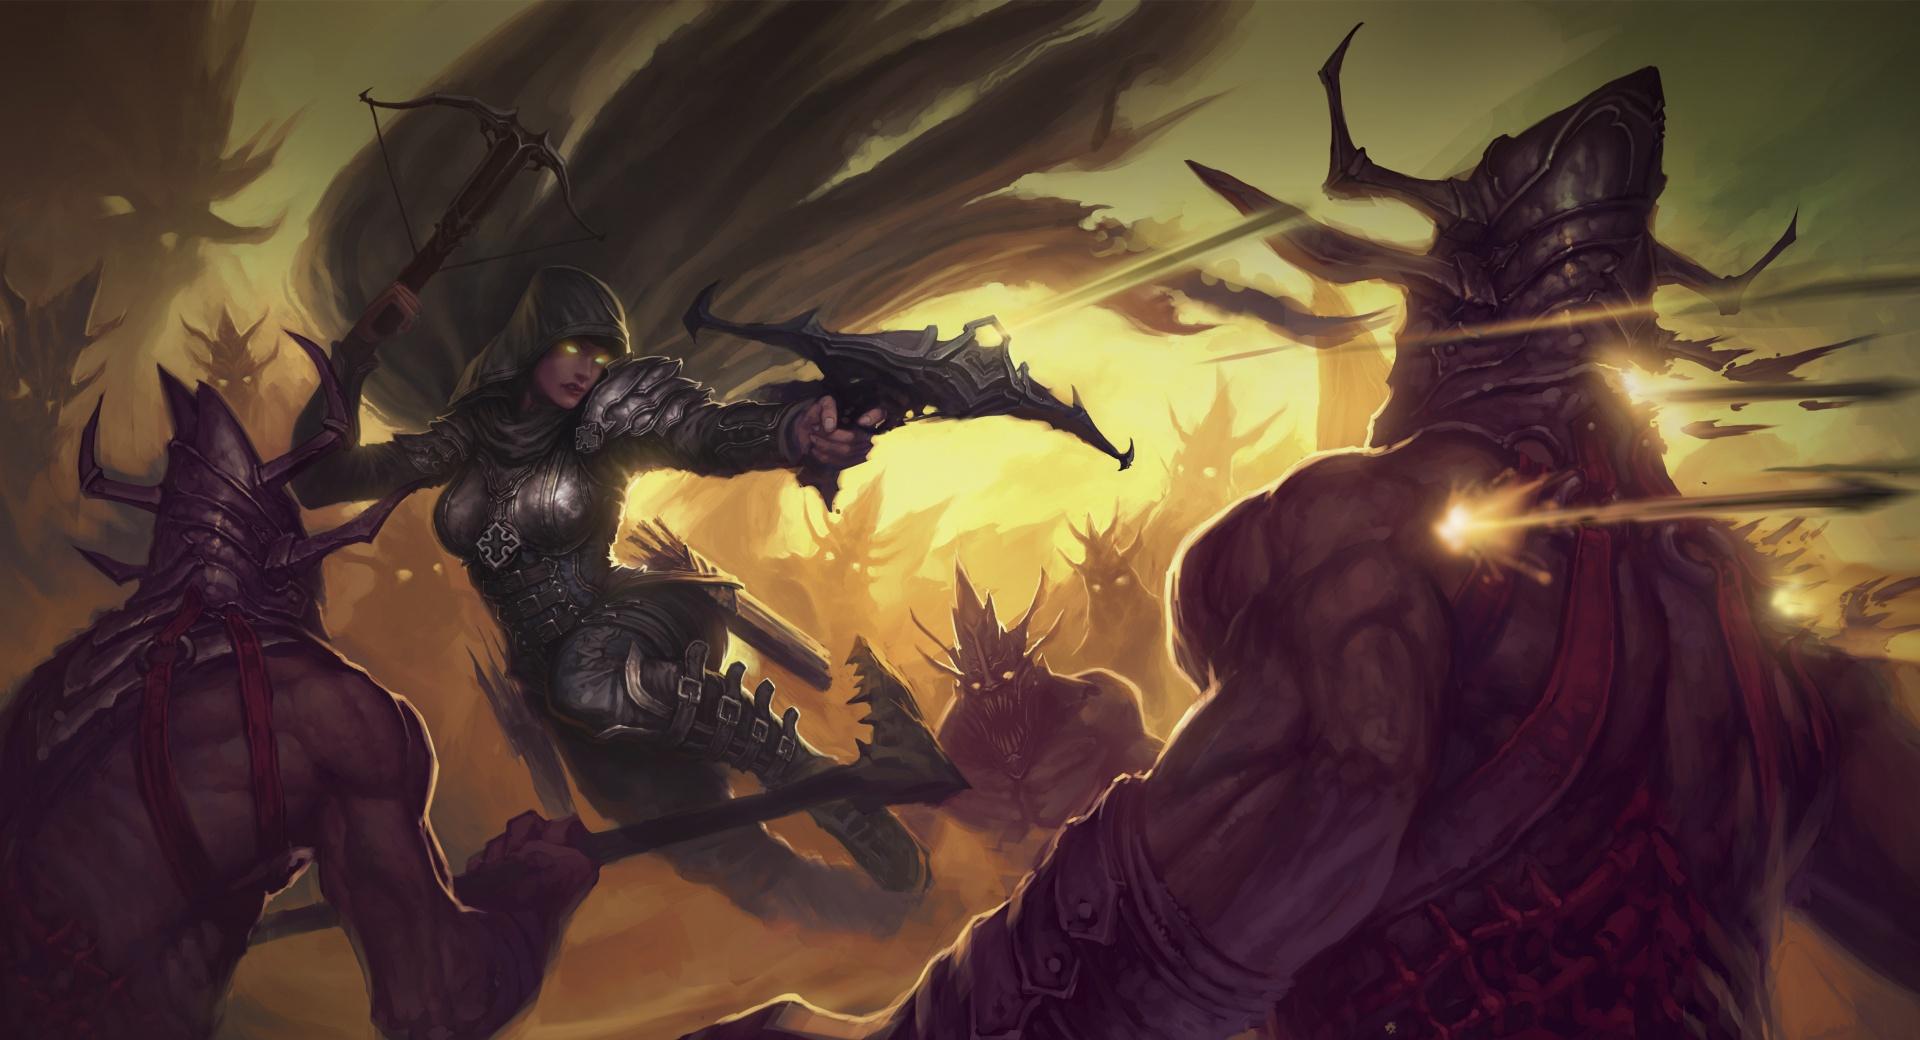 Diablo 3 Demon Hunter at 1024 x 768 size wallpapers HD quality